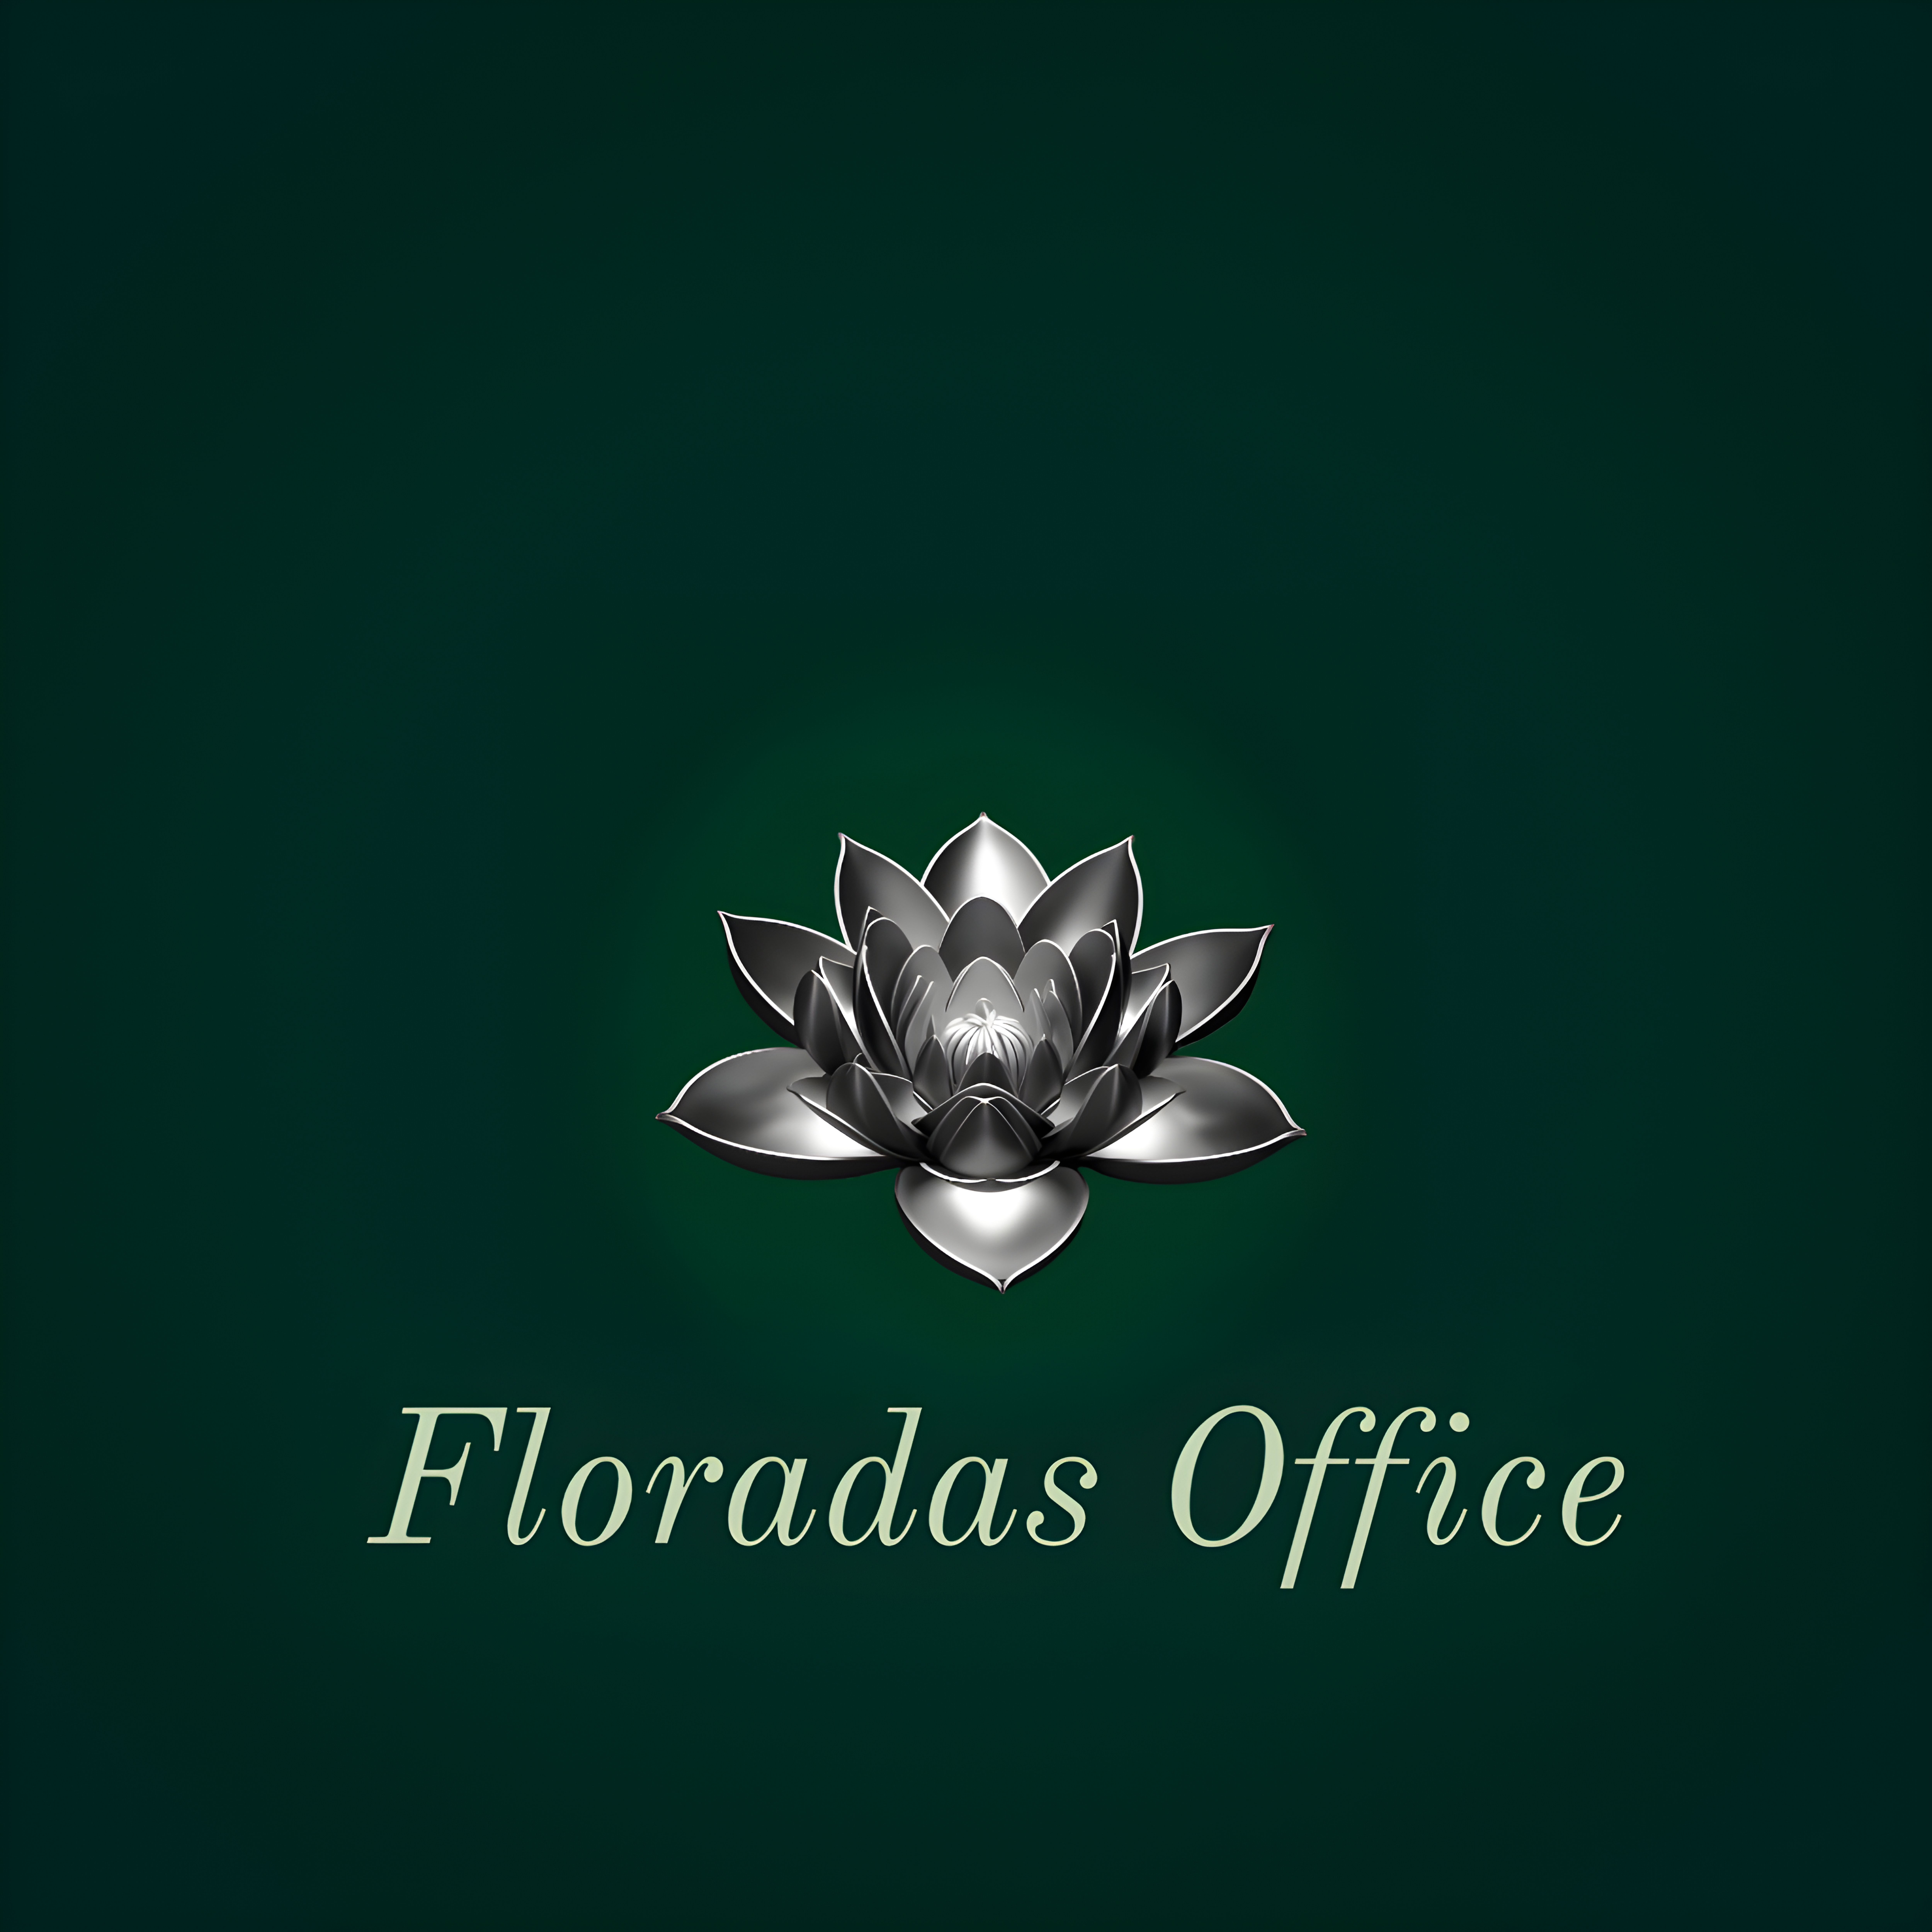 Floradas Office